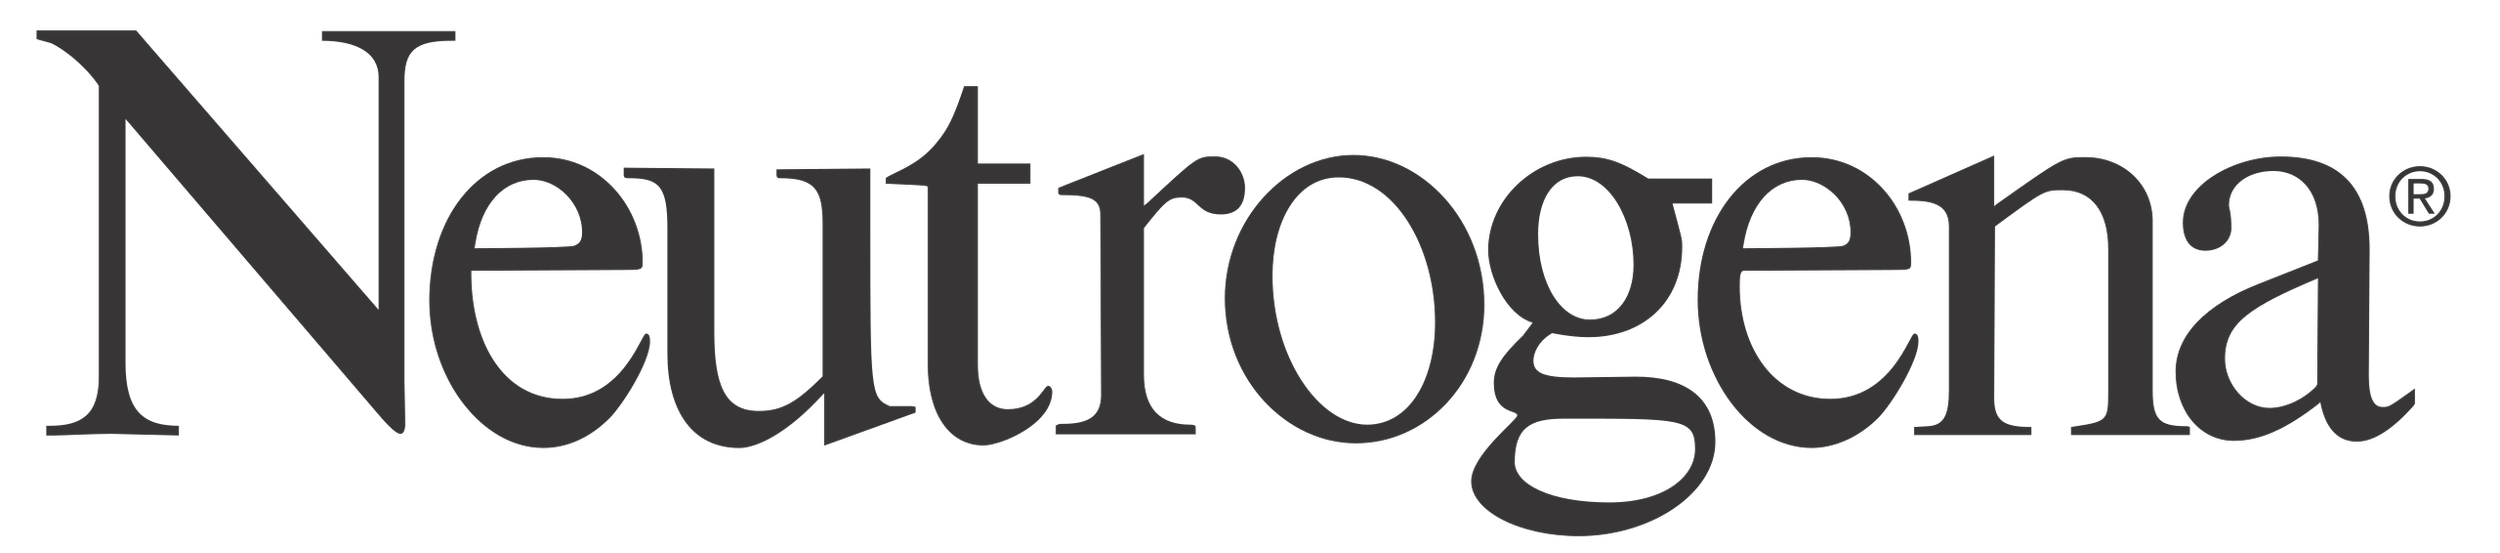 2560px-Neutrogena_logo.svg.png